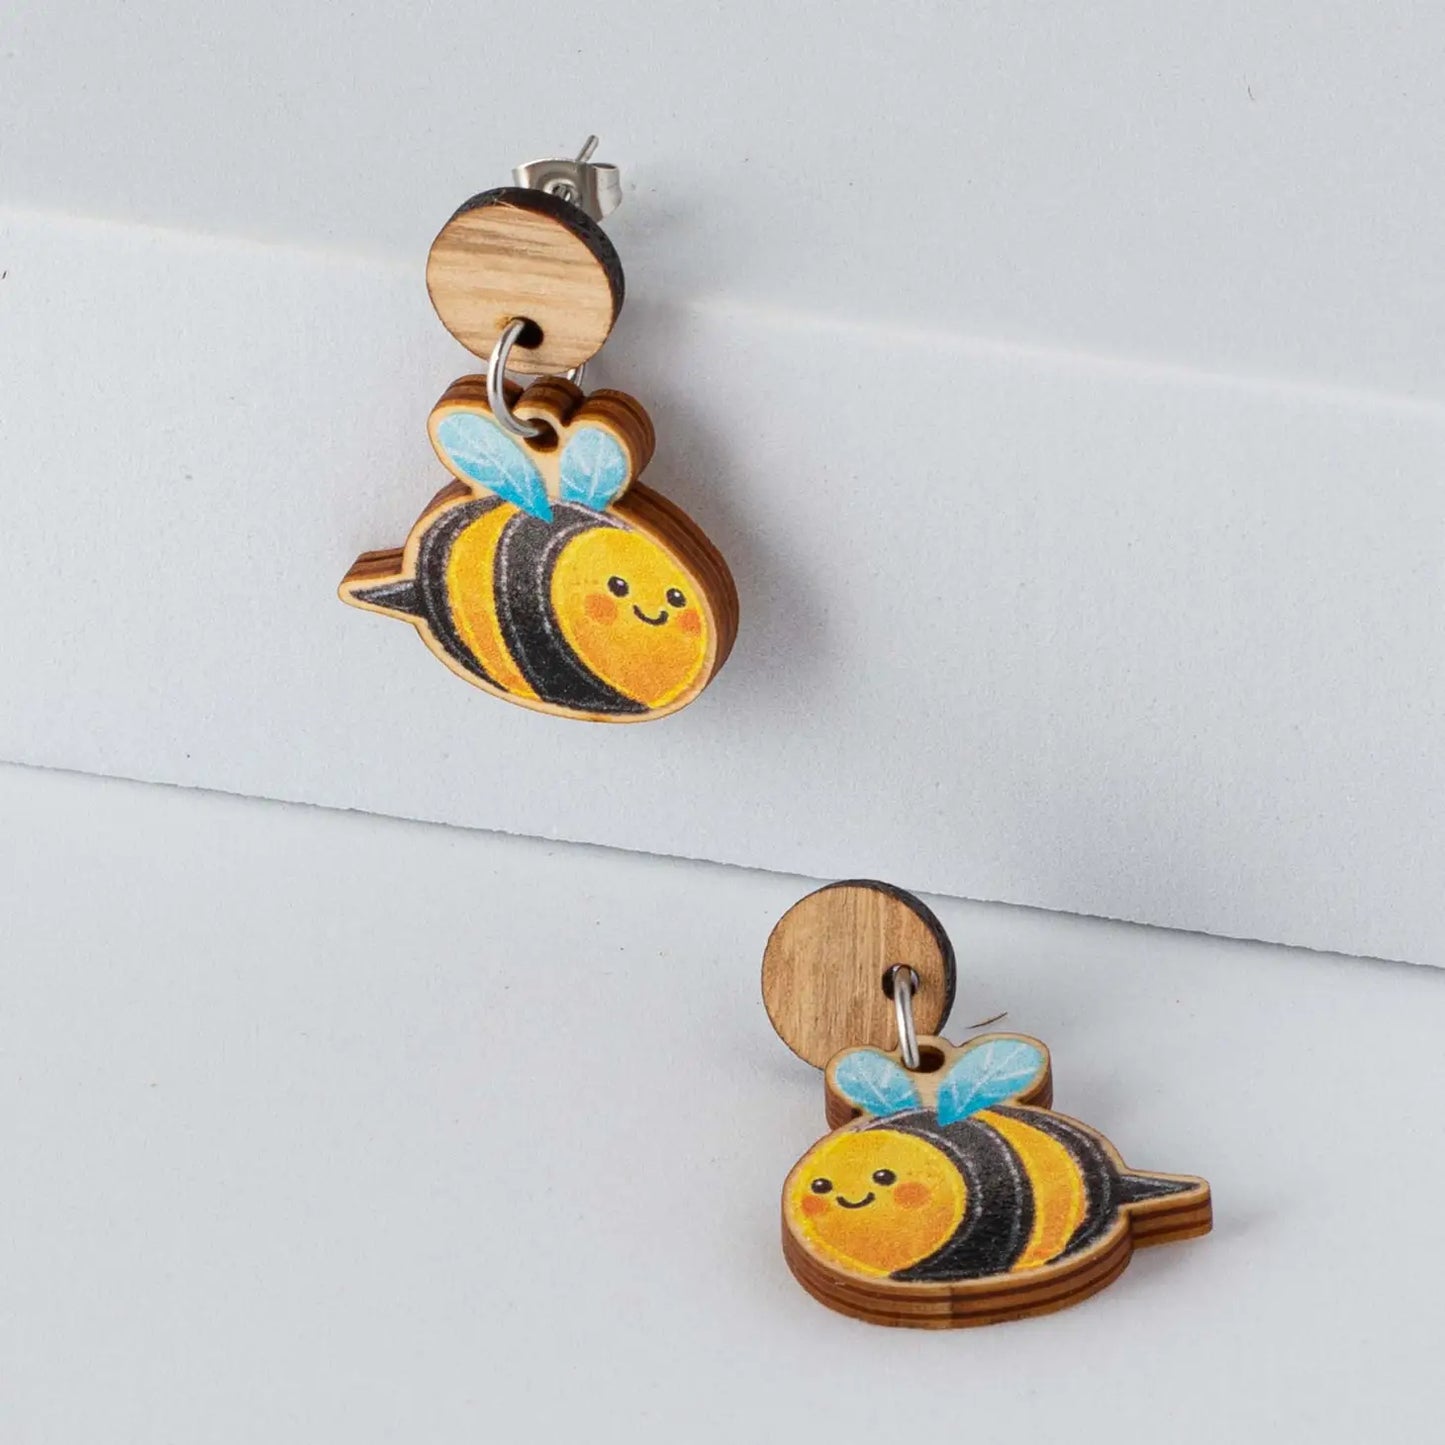 Stray Leaves - Little Bees wooden earrings